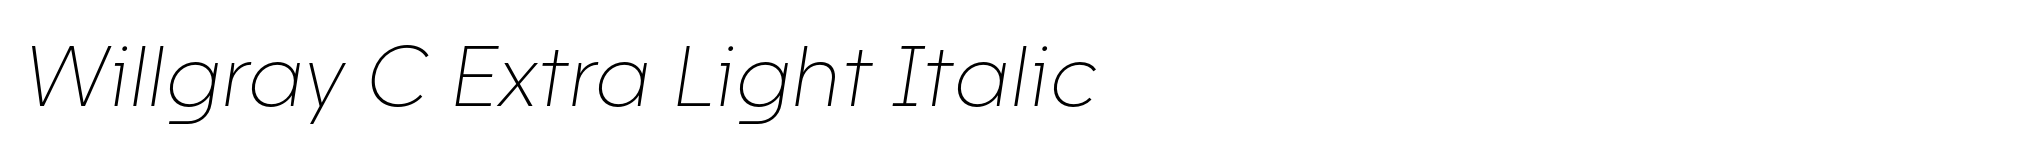 Willgray C Extra Light Italic image